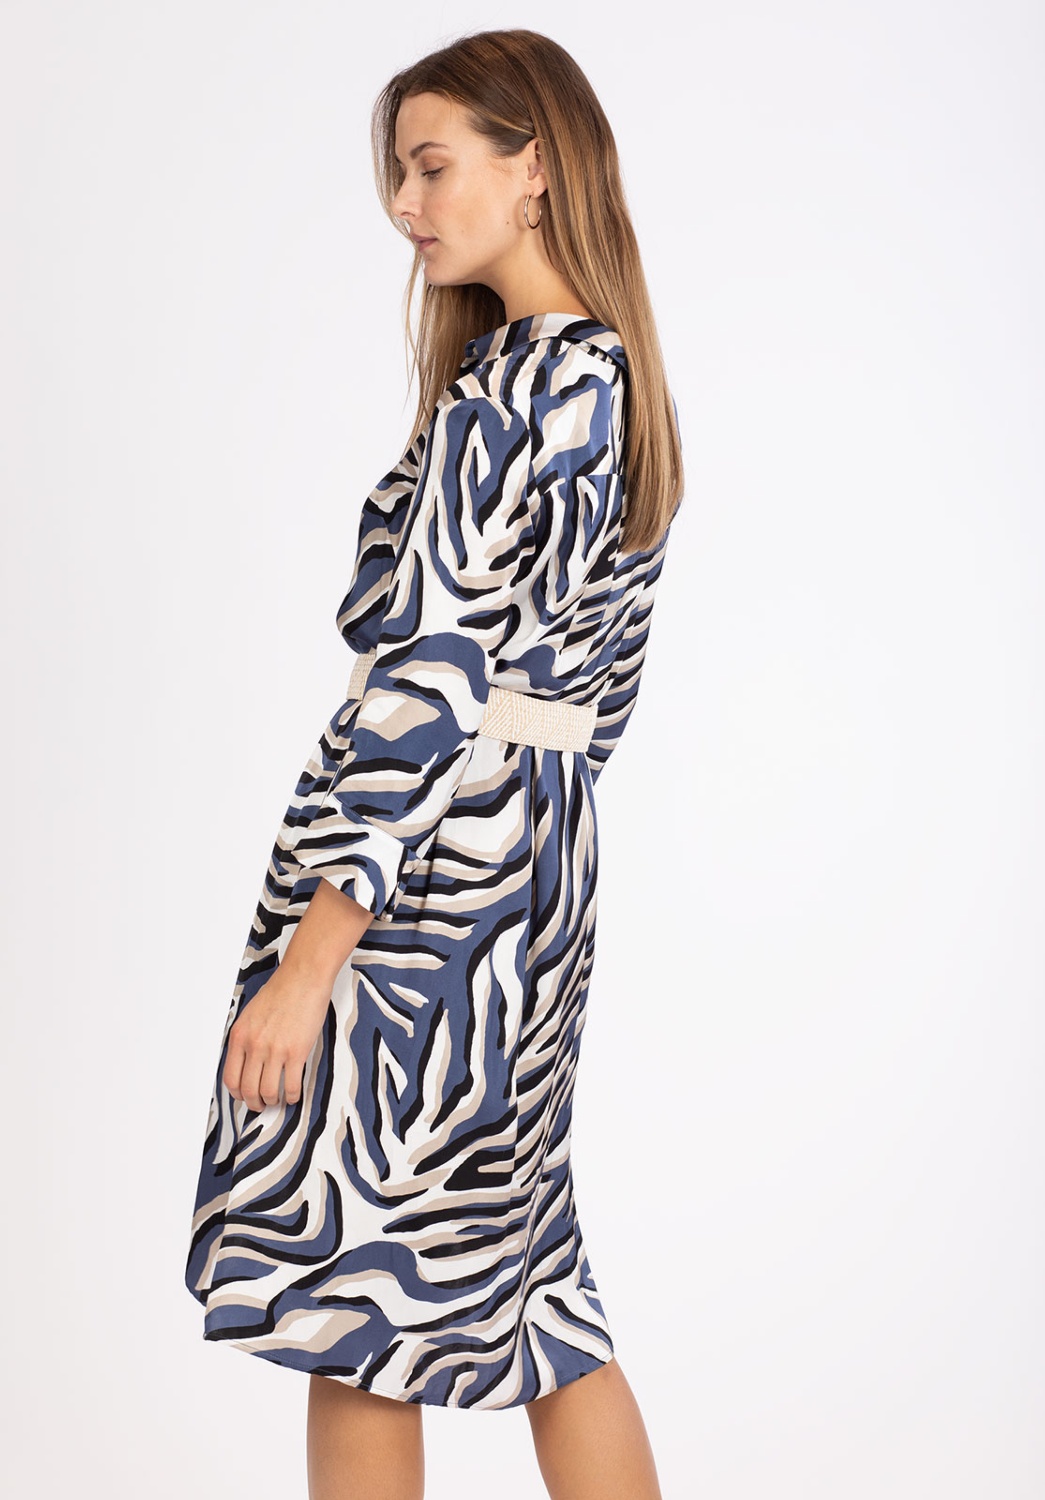 Satin Zebra Dress 4